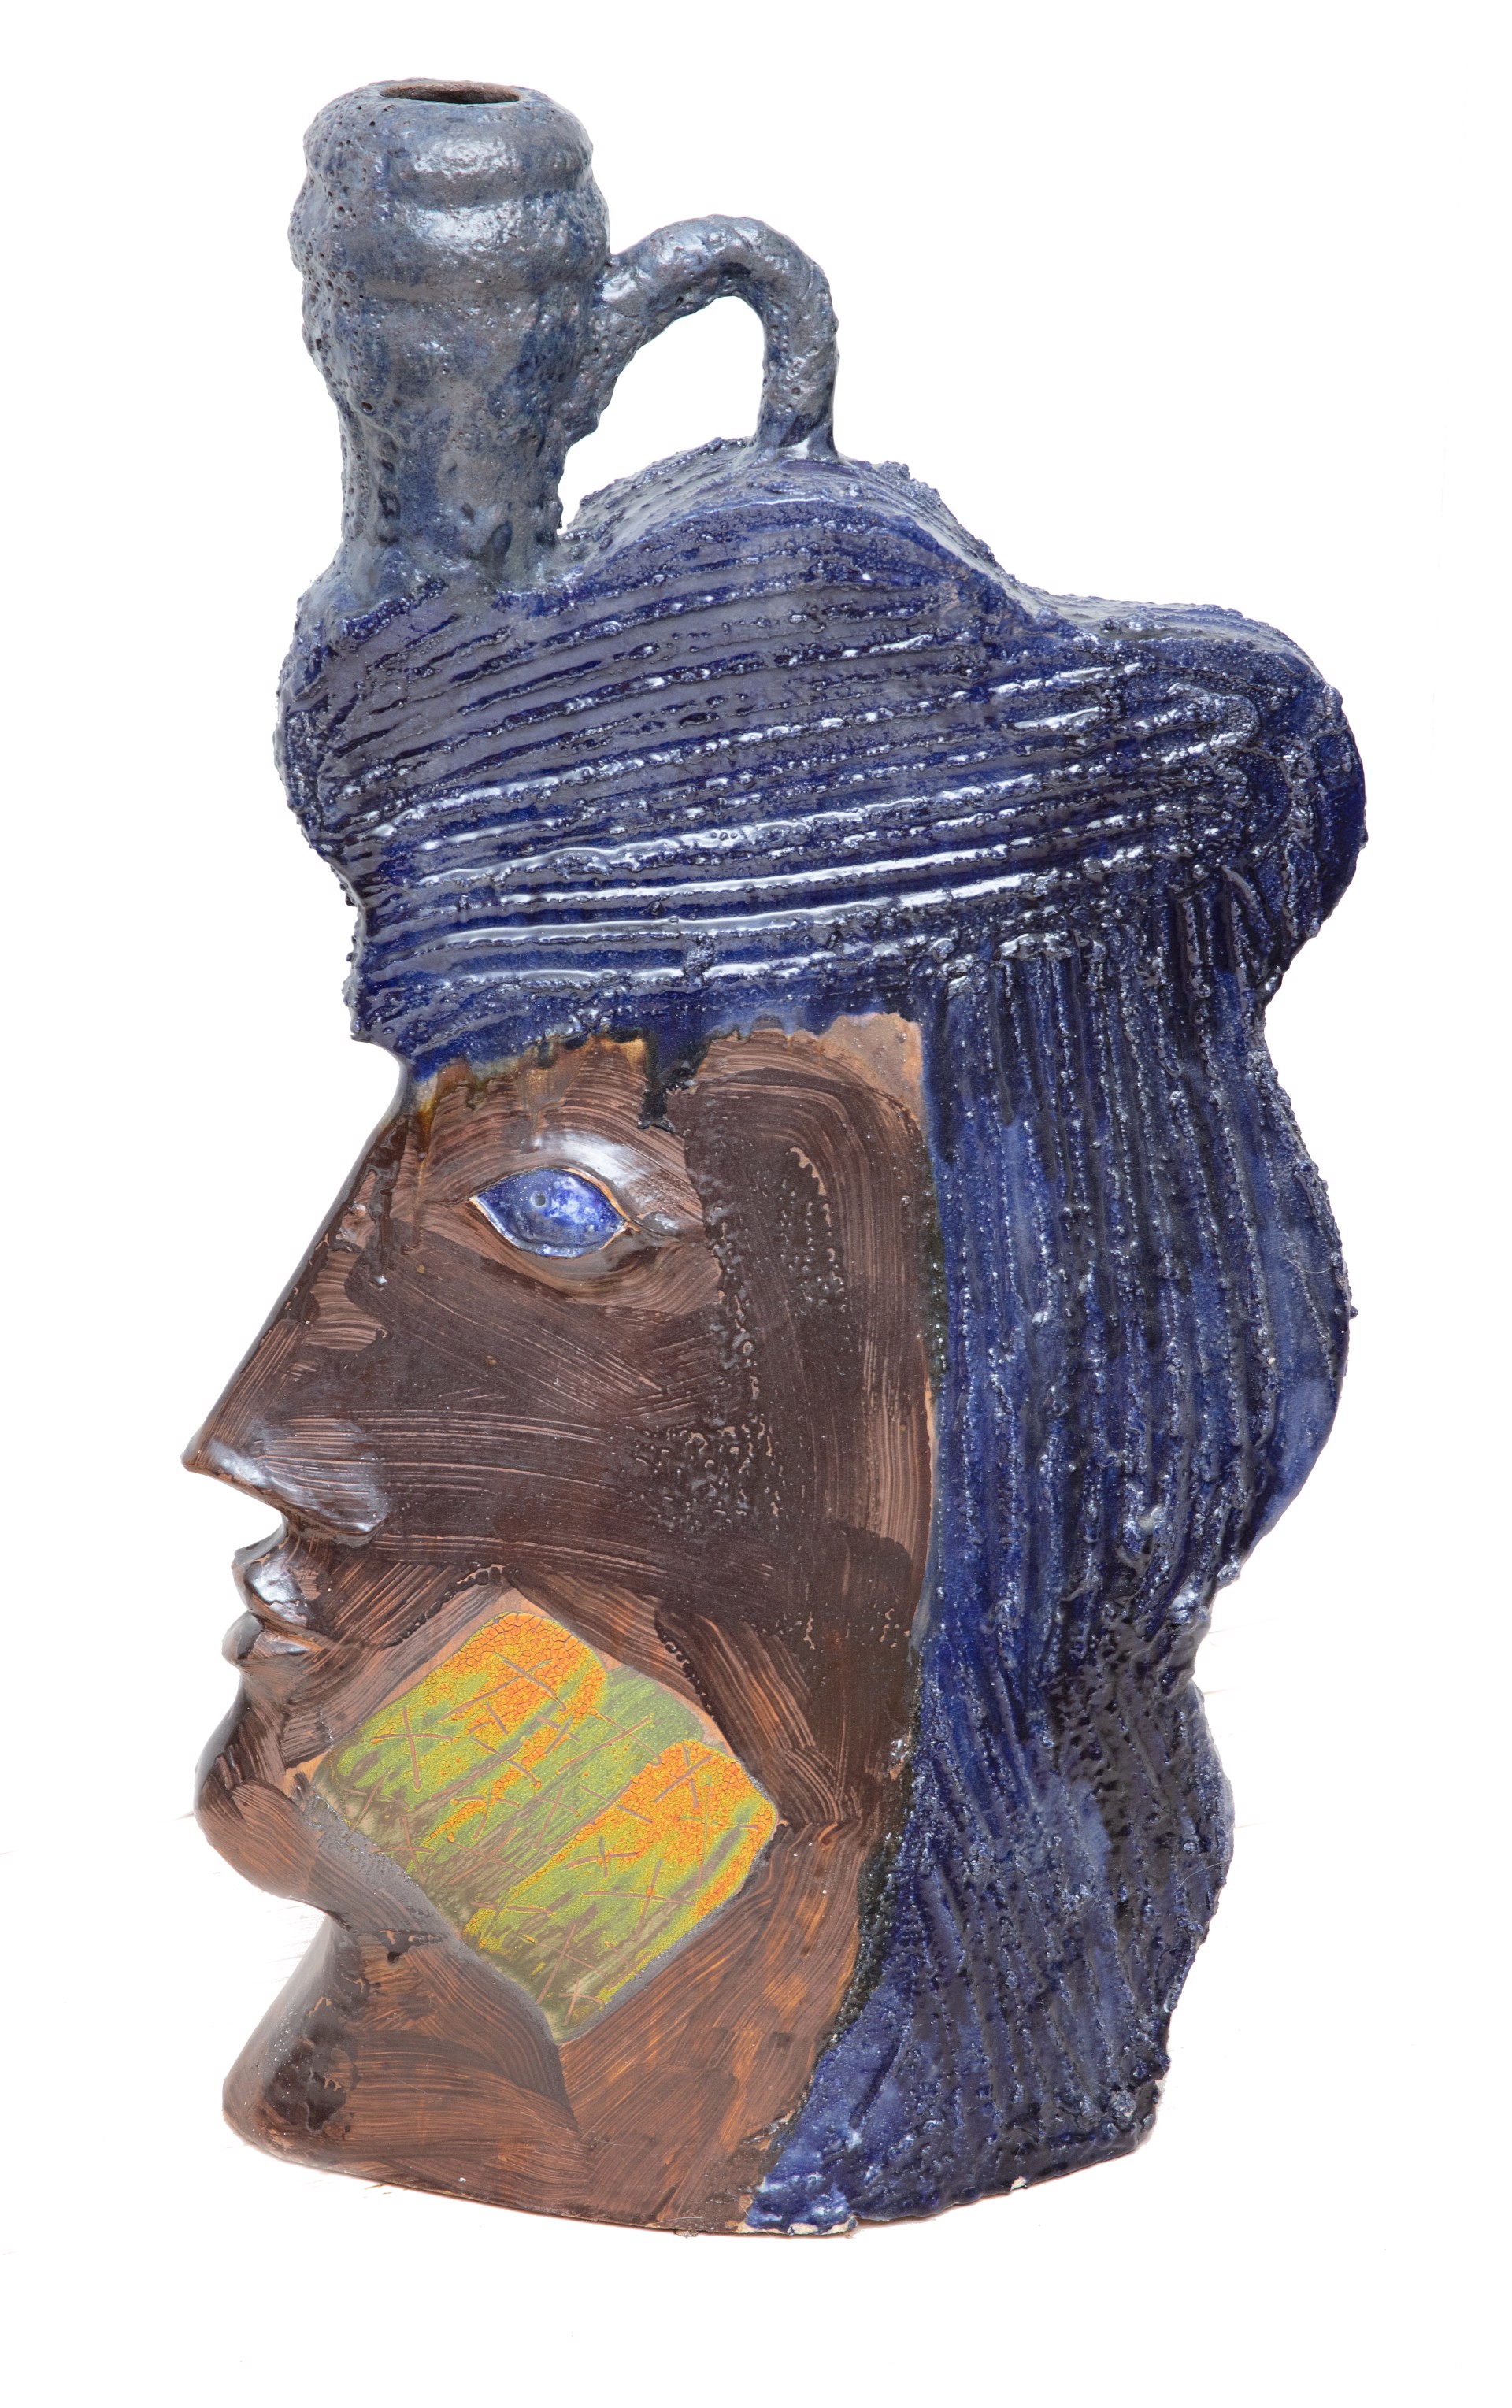 History of Pottery, Africa by Steven Kemenyffy